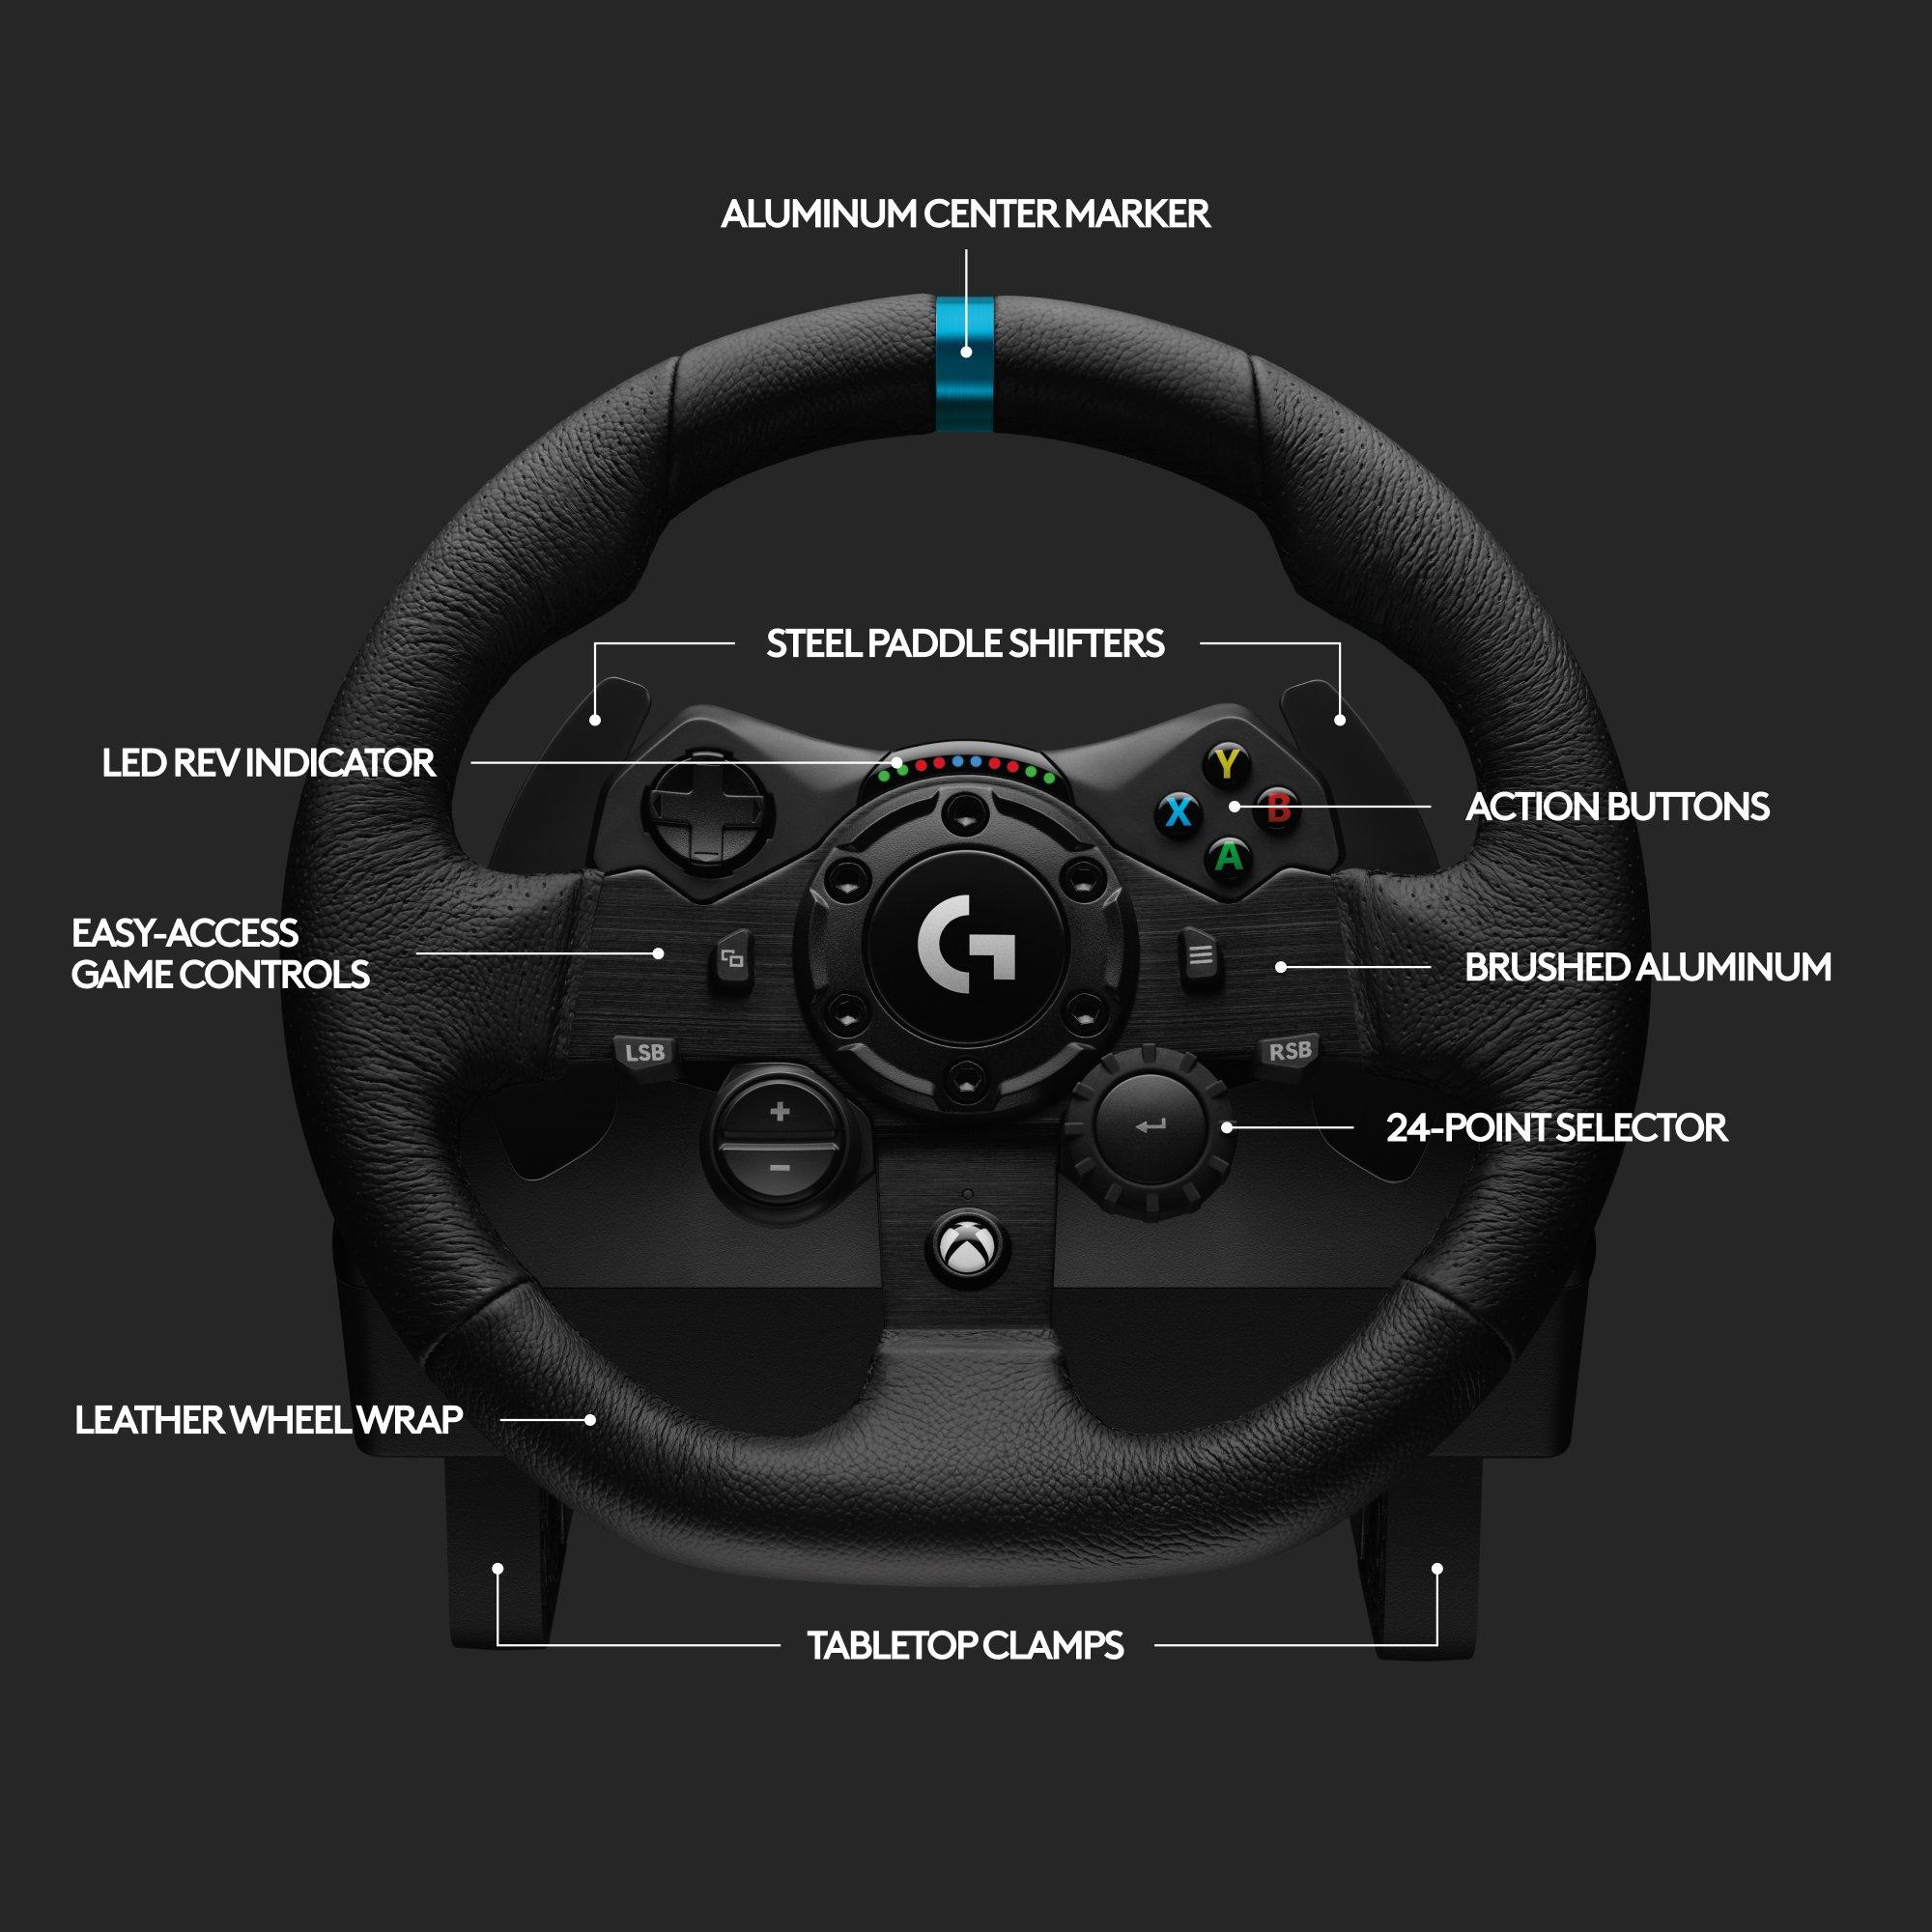  Buy Logitech G923 Racing Wheel and Pedals, TRUEFORCE